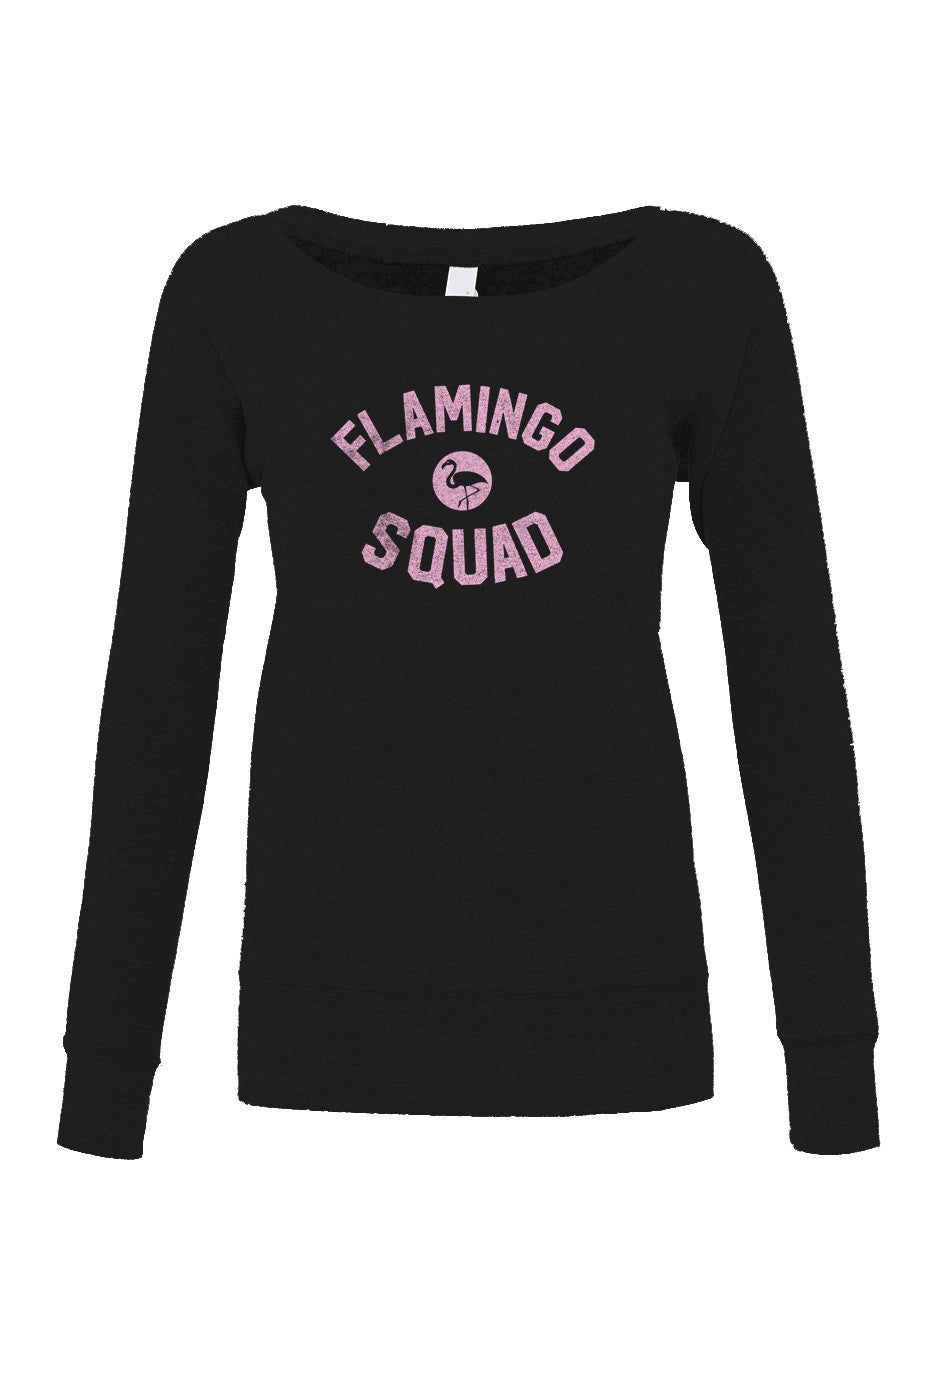 Women's Flamingo Squad Scoop Neck Fleece